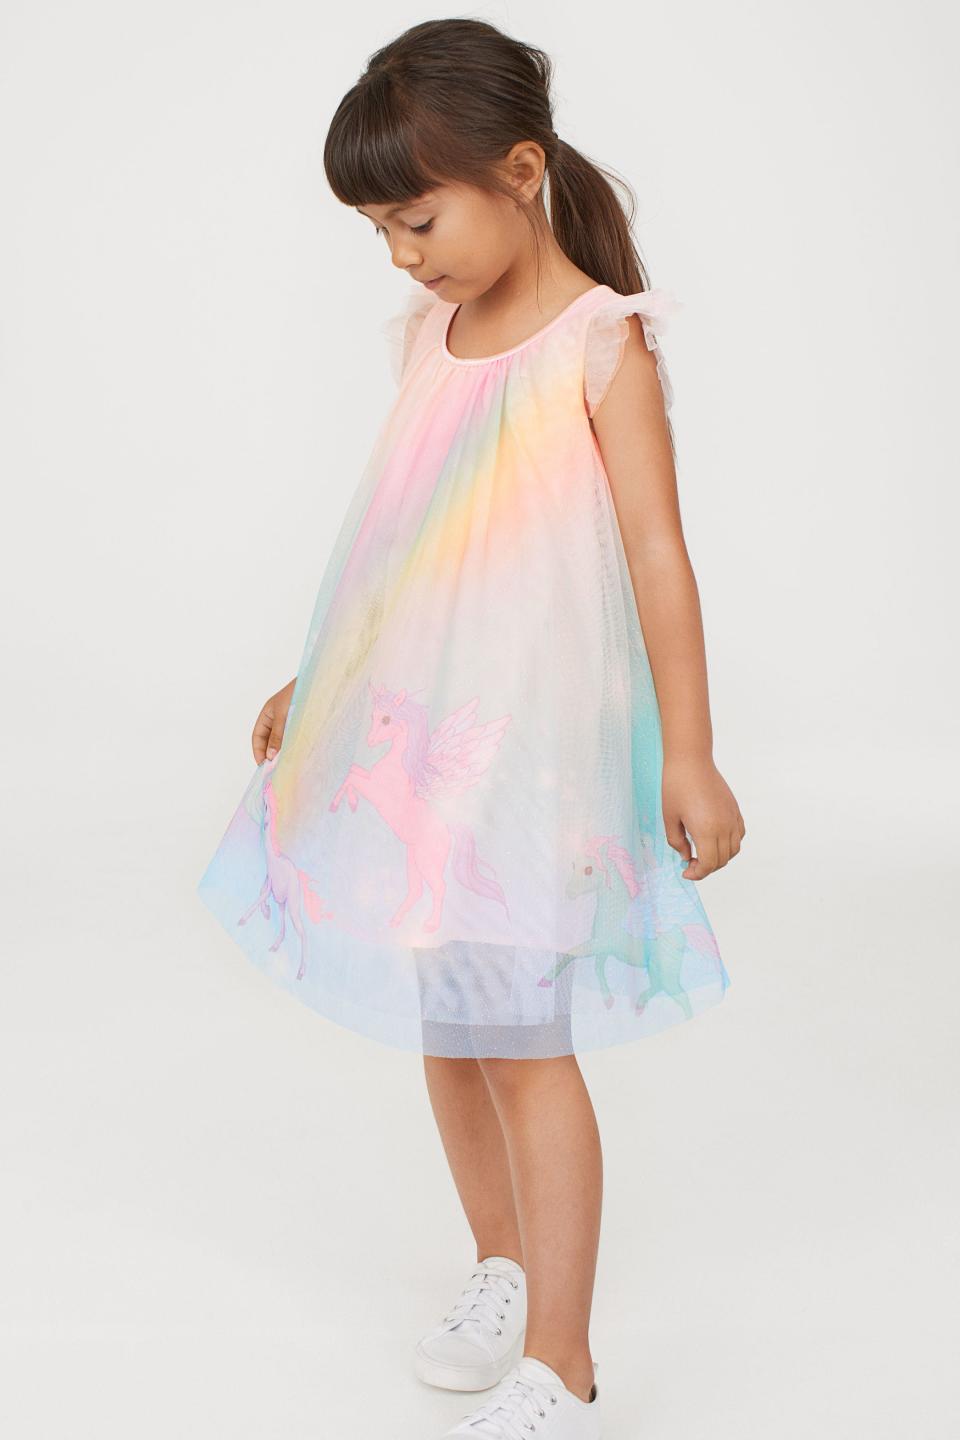 H&M Glittery Tulle Dress